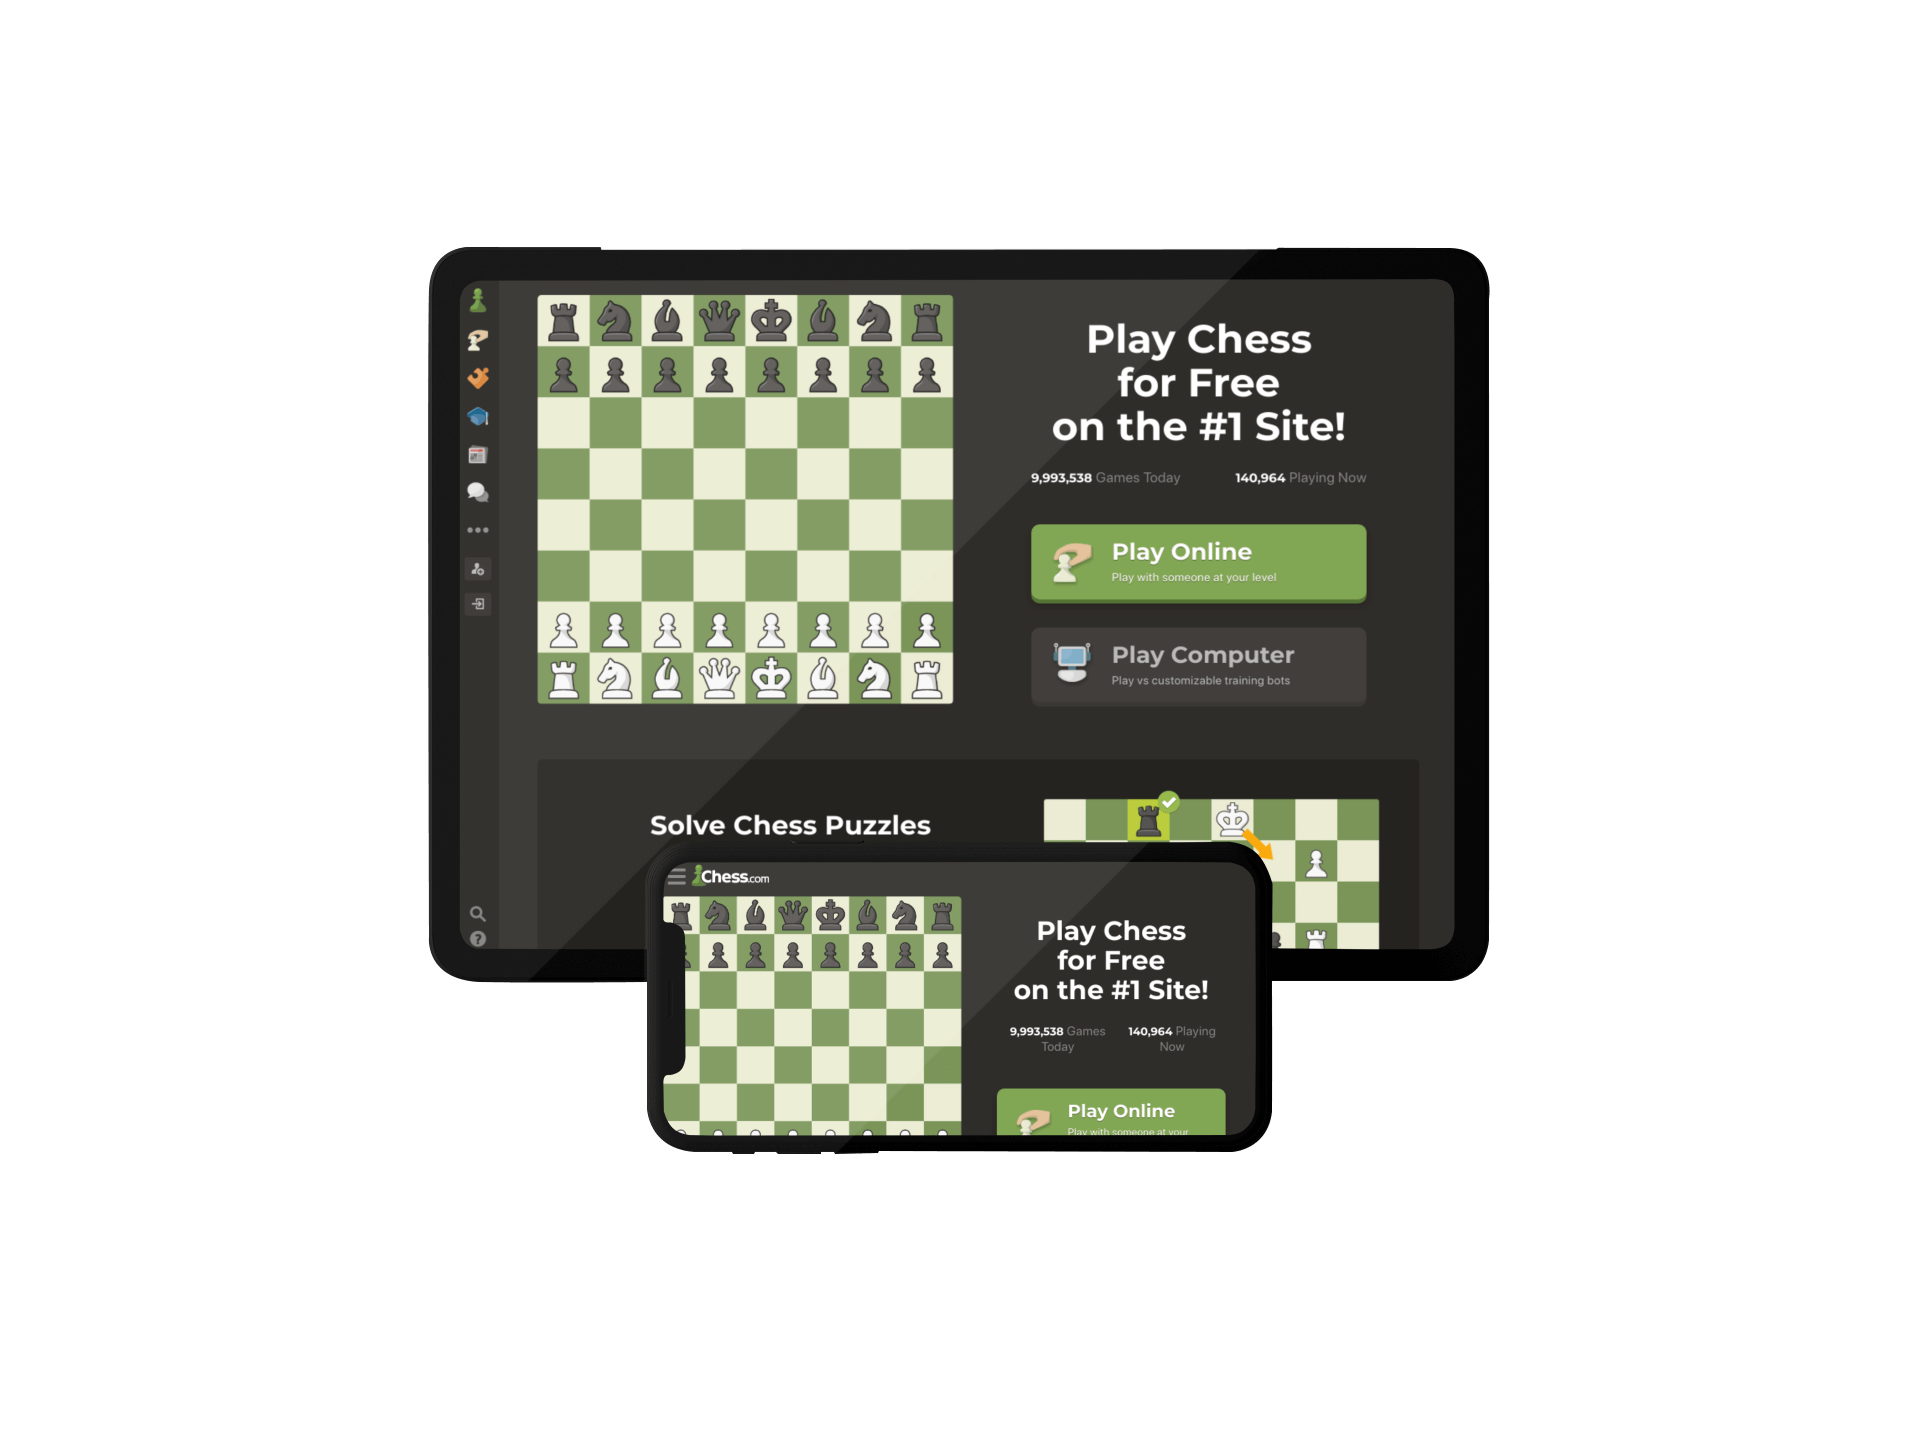 https://449964.fs1.hubspotusercontent-na1.net/hubfs/449964/chesscom-website-mockup.png